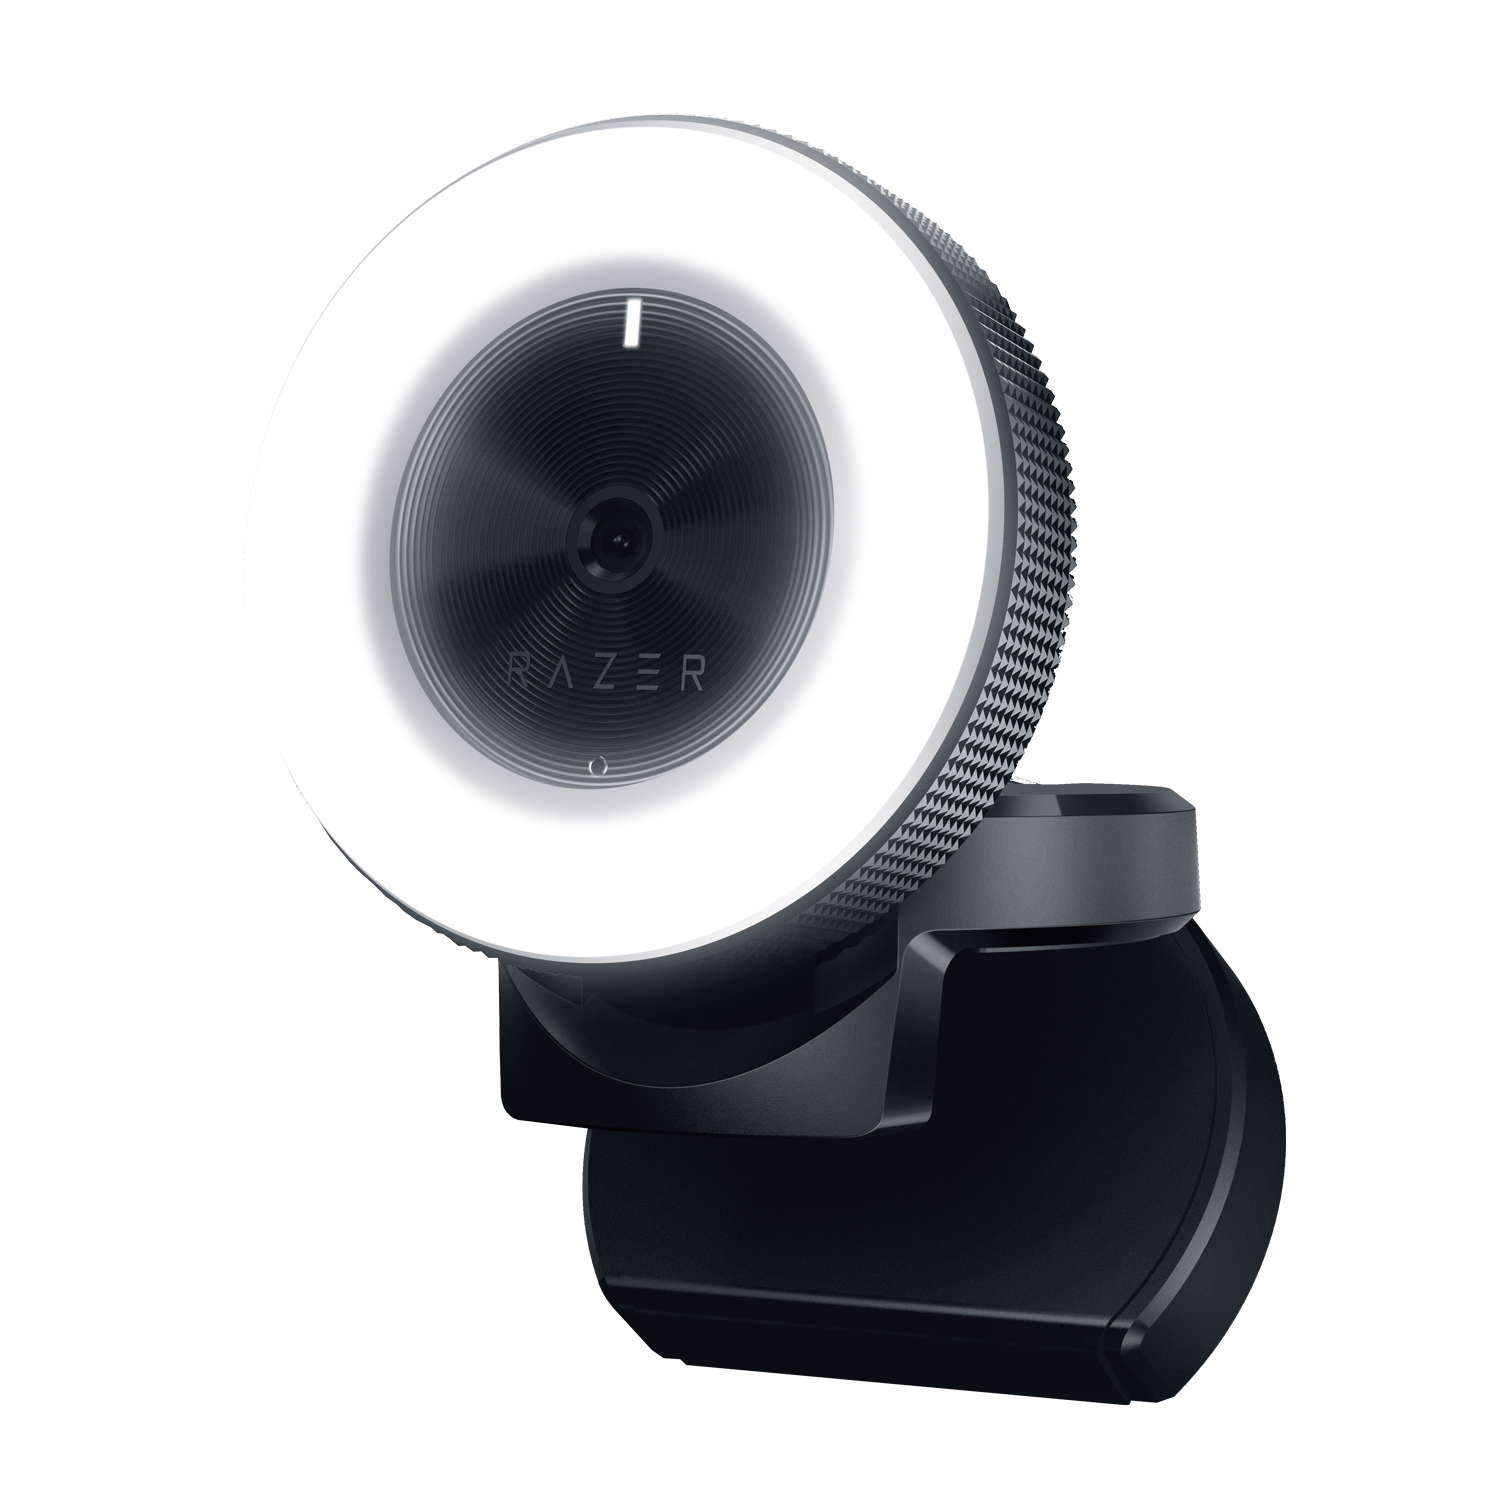 Razer Kiyo Streaming Webcam, Full HD, Auto Focus, Ring Light with Adjustable Brightness, Black - image 6 of 10